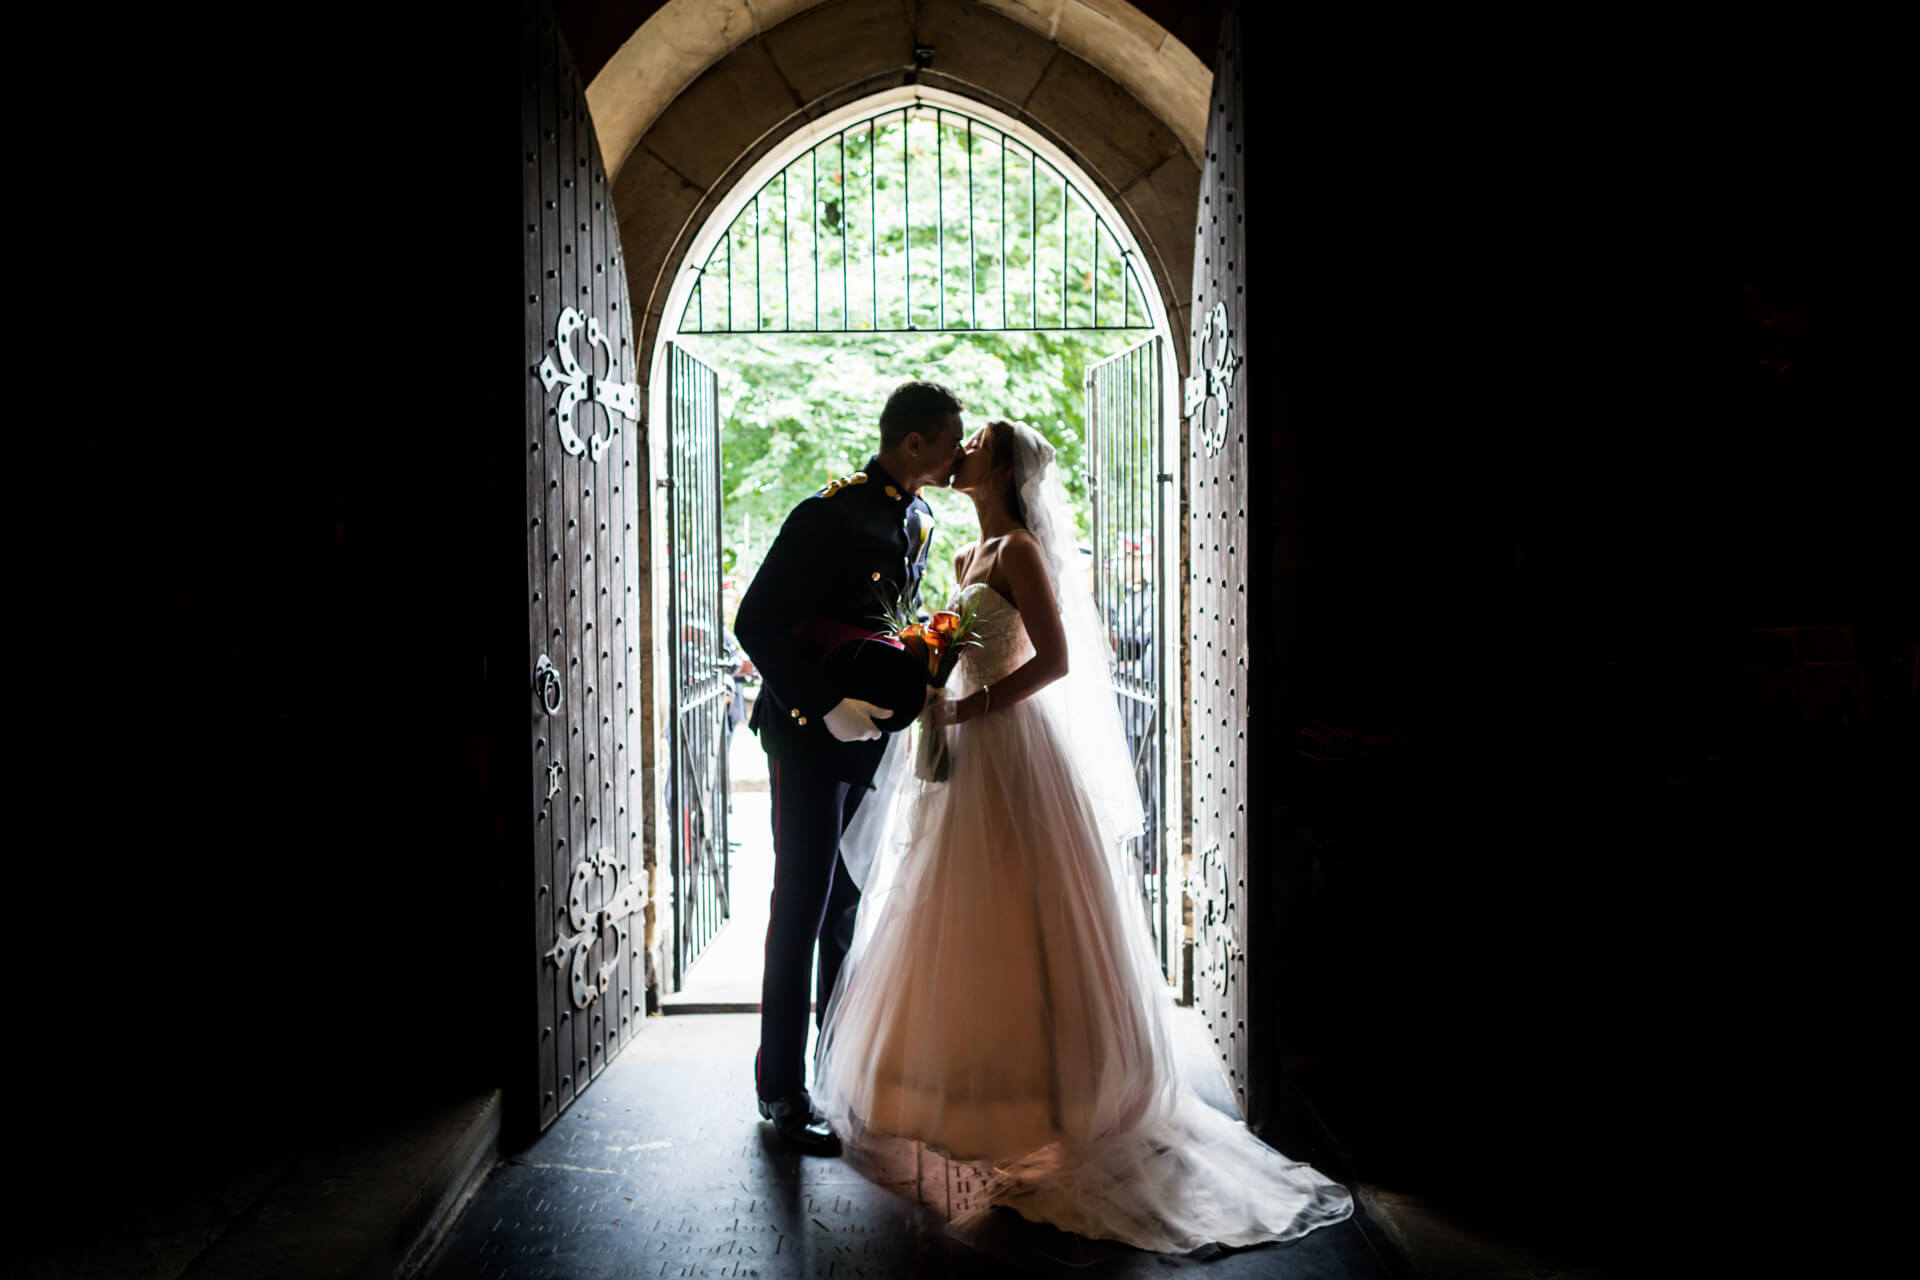 wedding couple kissing in the church doorway